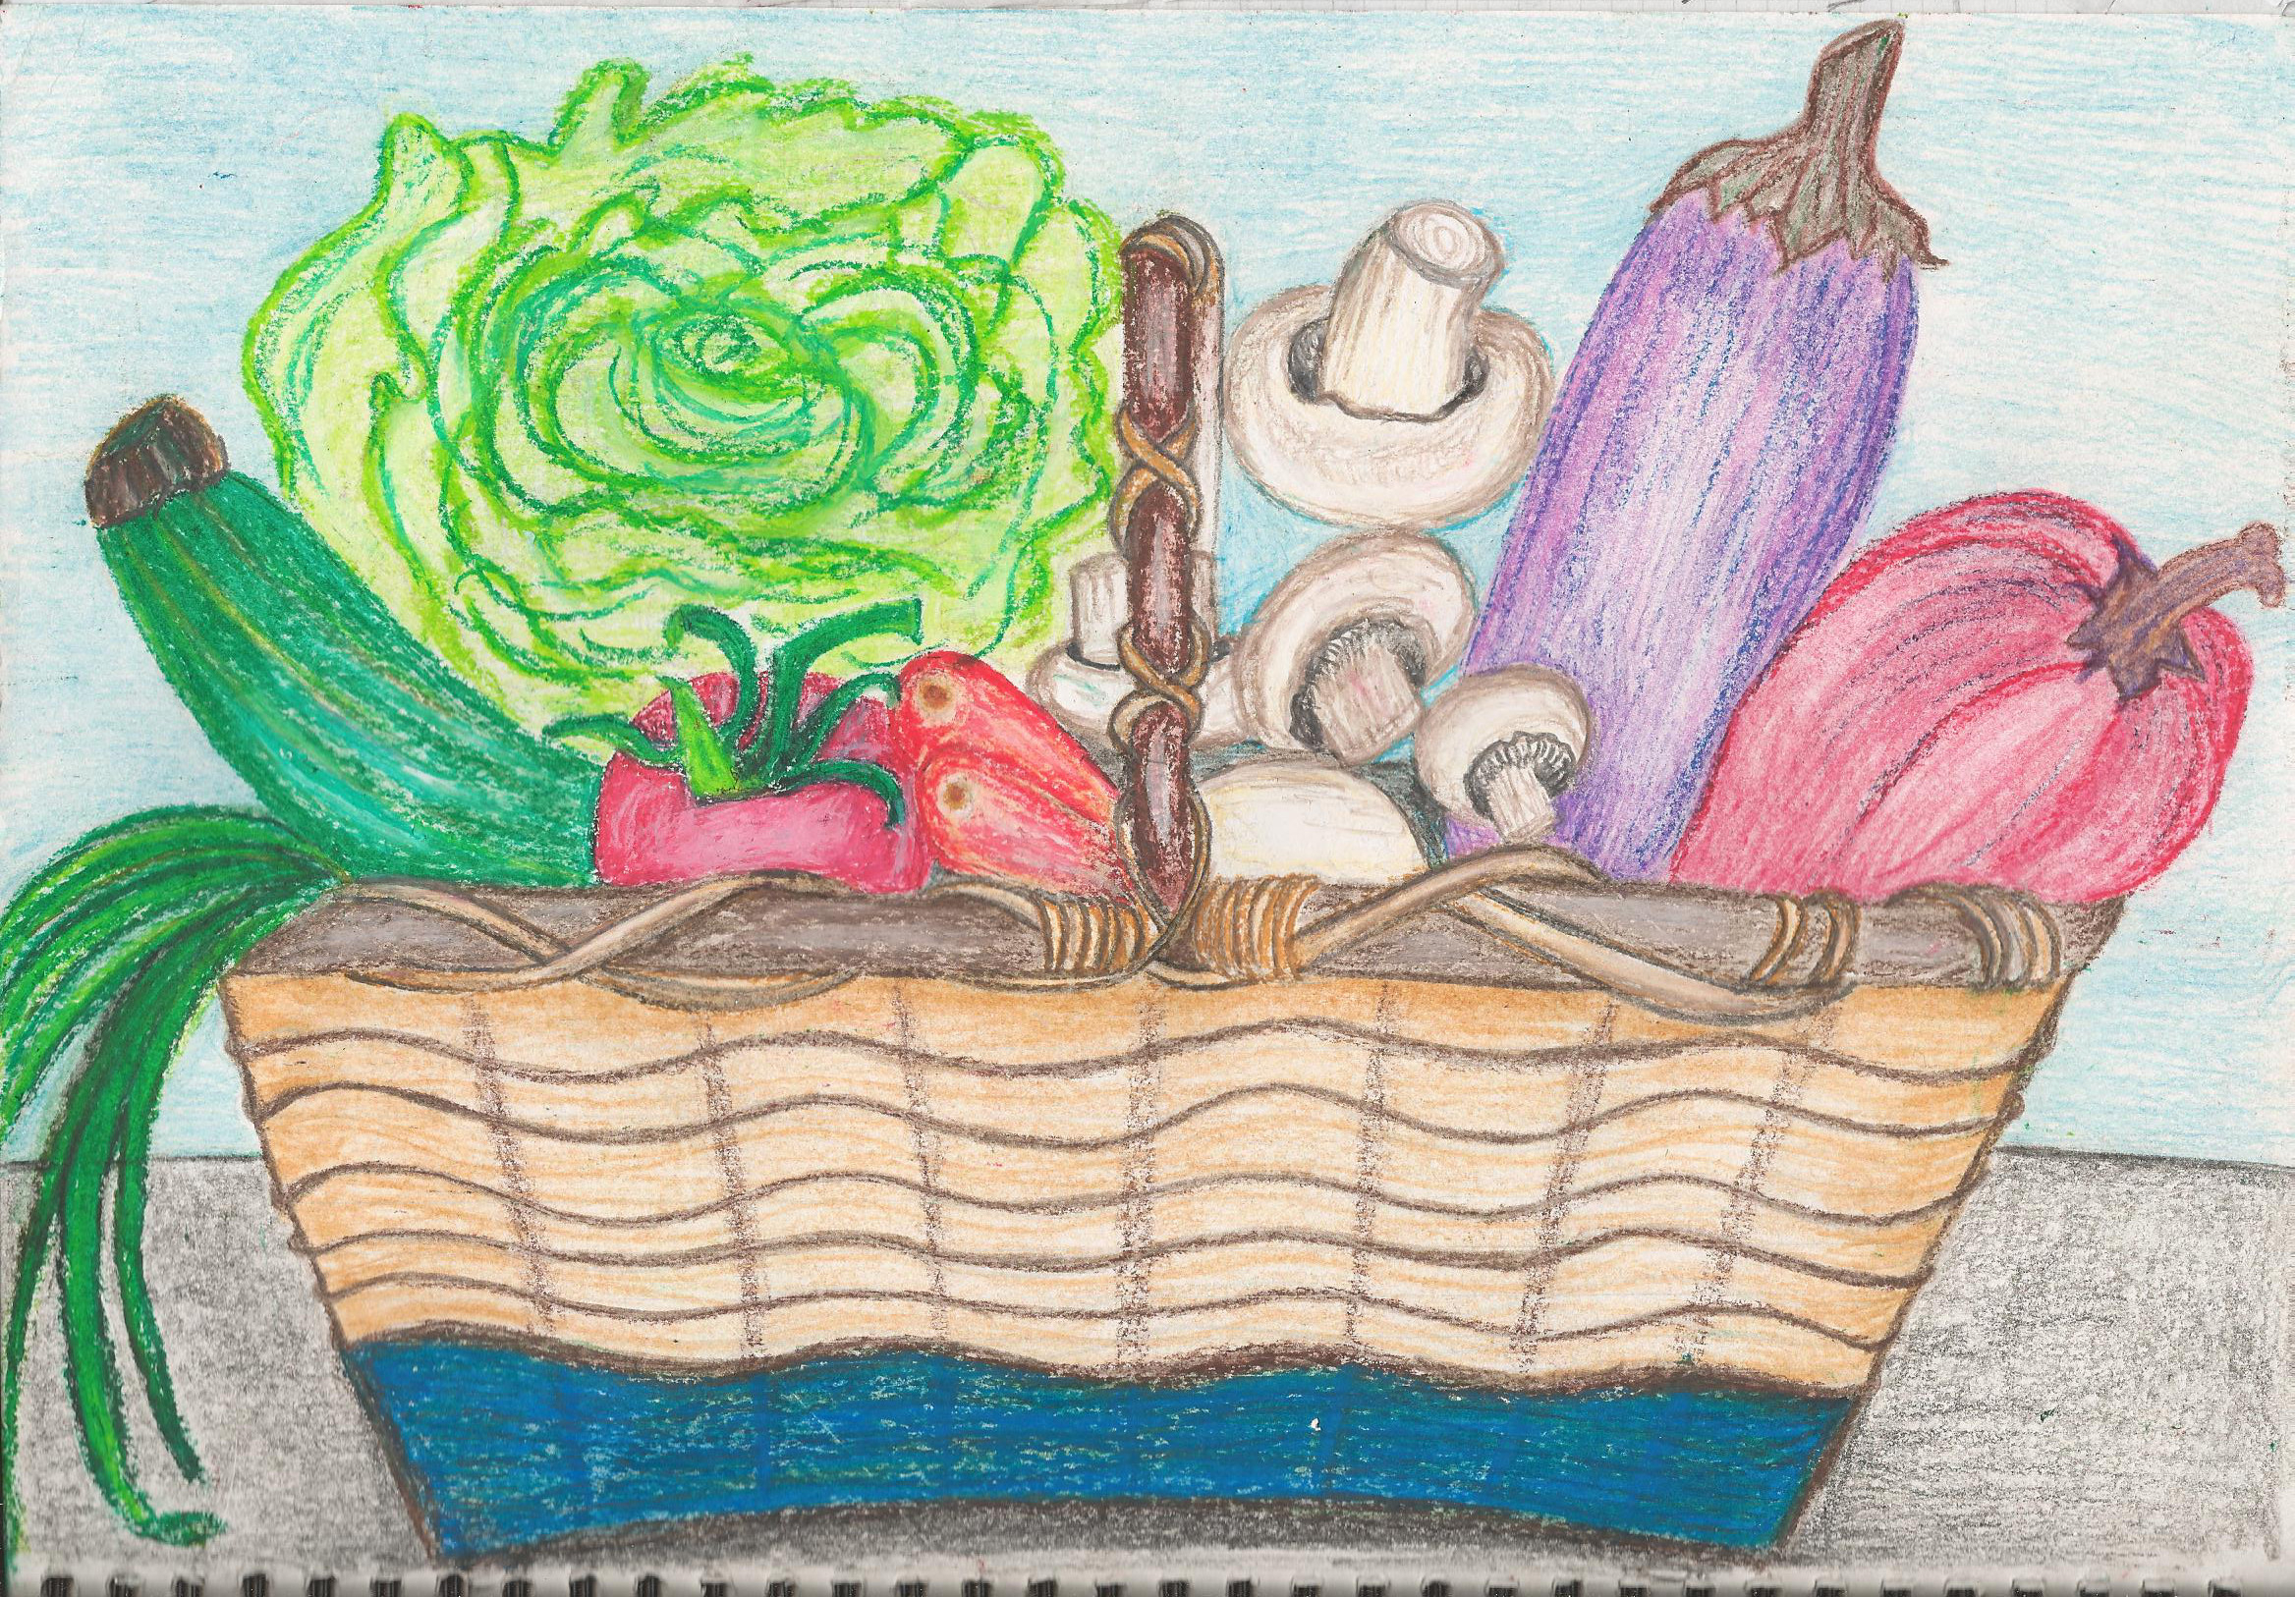 Basket Of Vegetables Drawing at GetDrawings | Free download